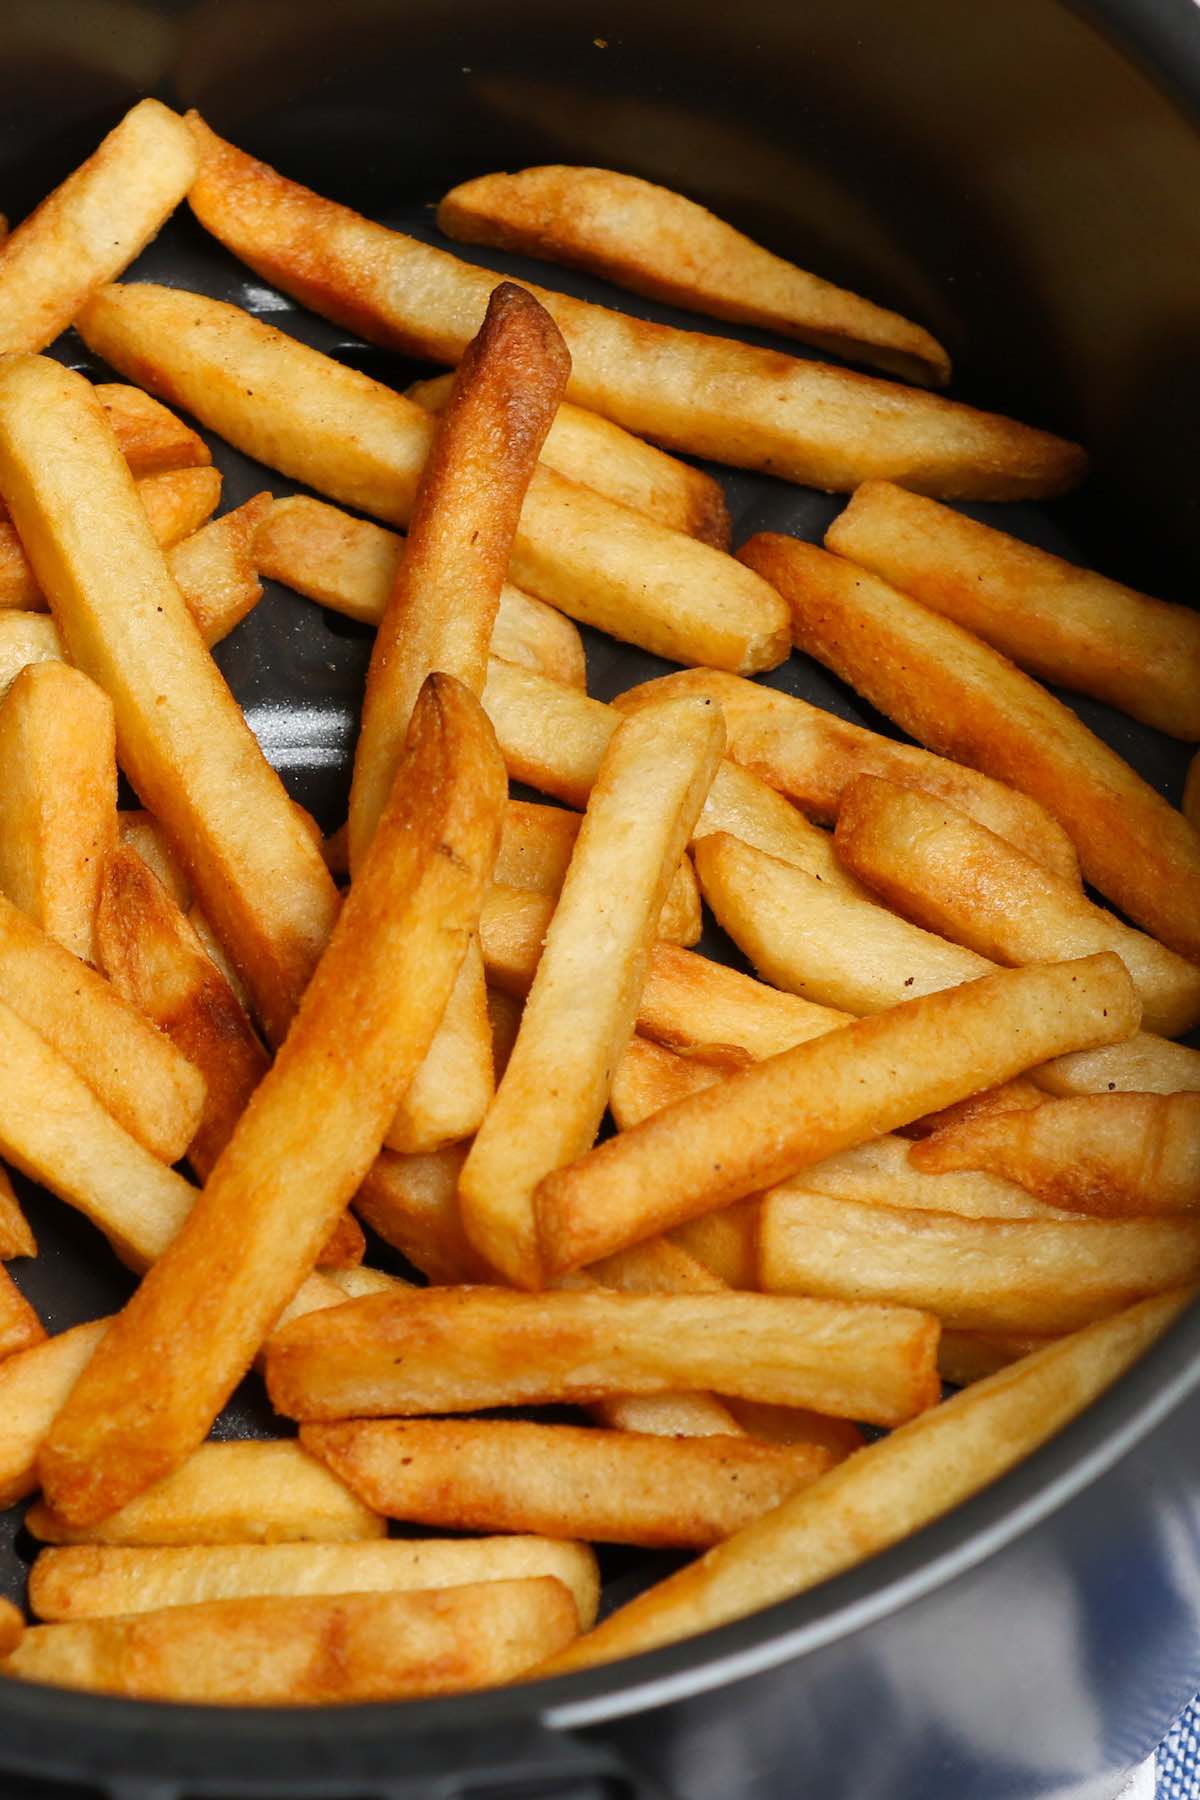 https://izzycooking.com/wp-content/uploads/2020/04/Air-Fryer-Frozen-French-Fries-1.jpg